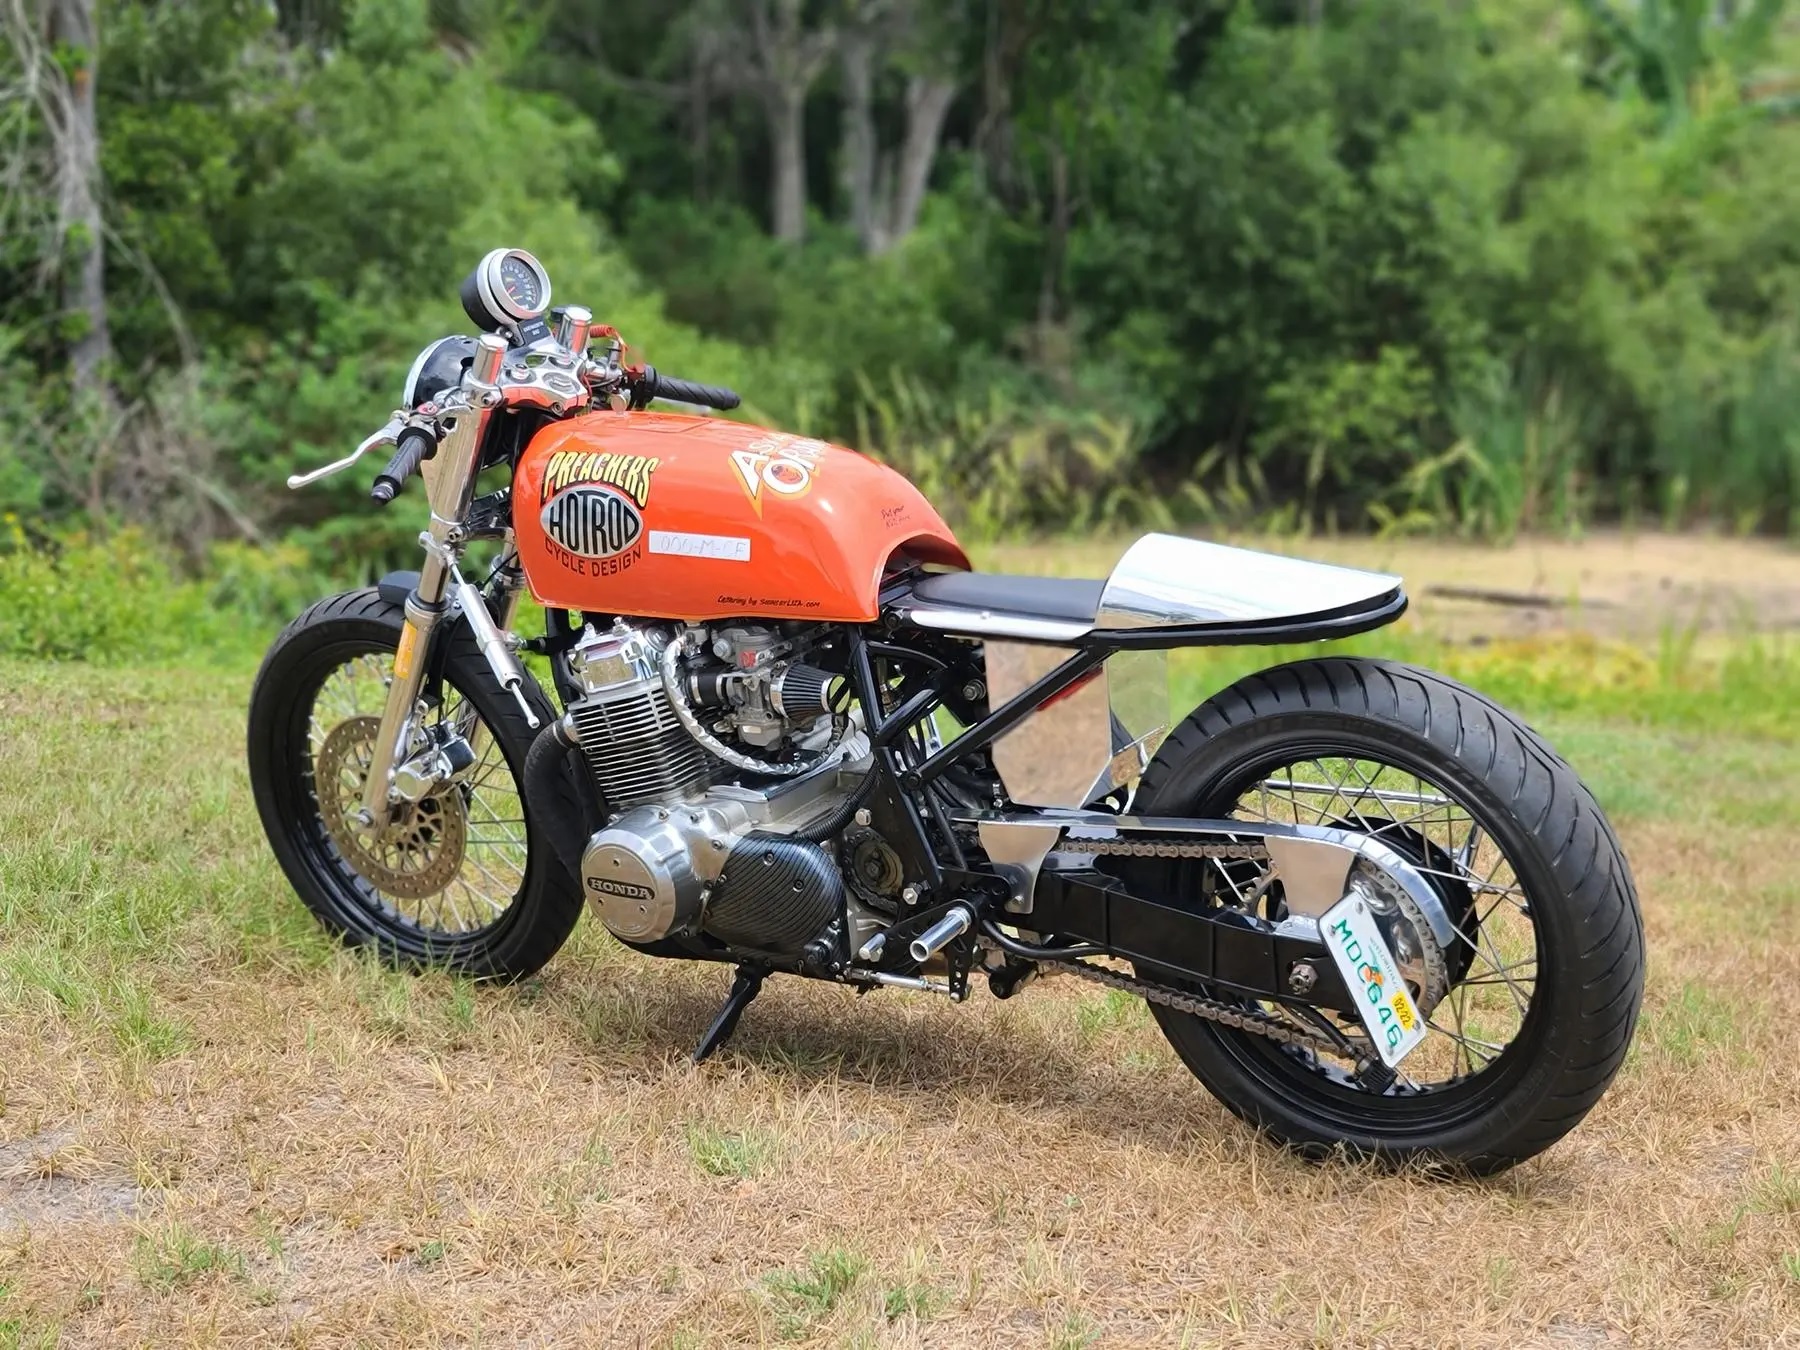 1971 Honda CB750 by Preachers Hot Rod Cycle Design